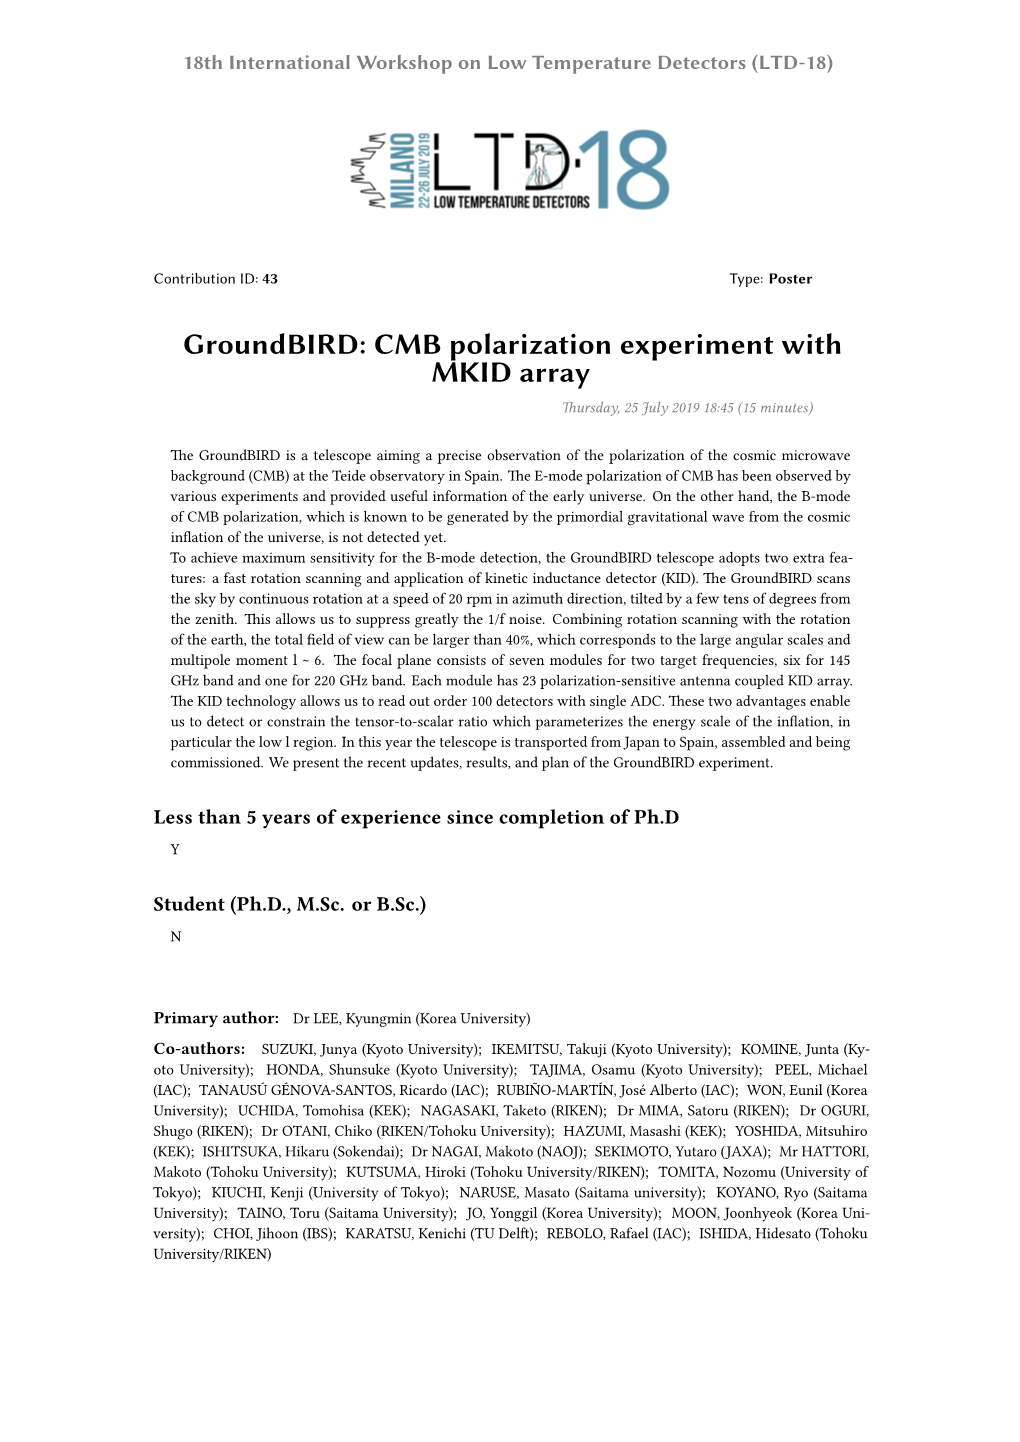 Groundbird: CMB Polarization Experiment with MKID Array Thursday, 25 July 2019 18:45 (15 Minutes)